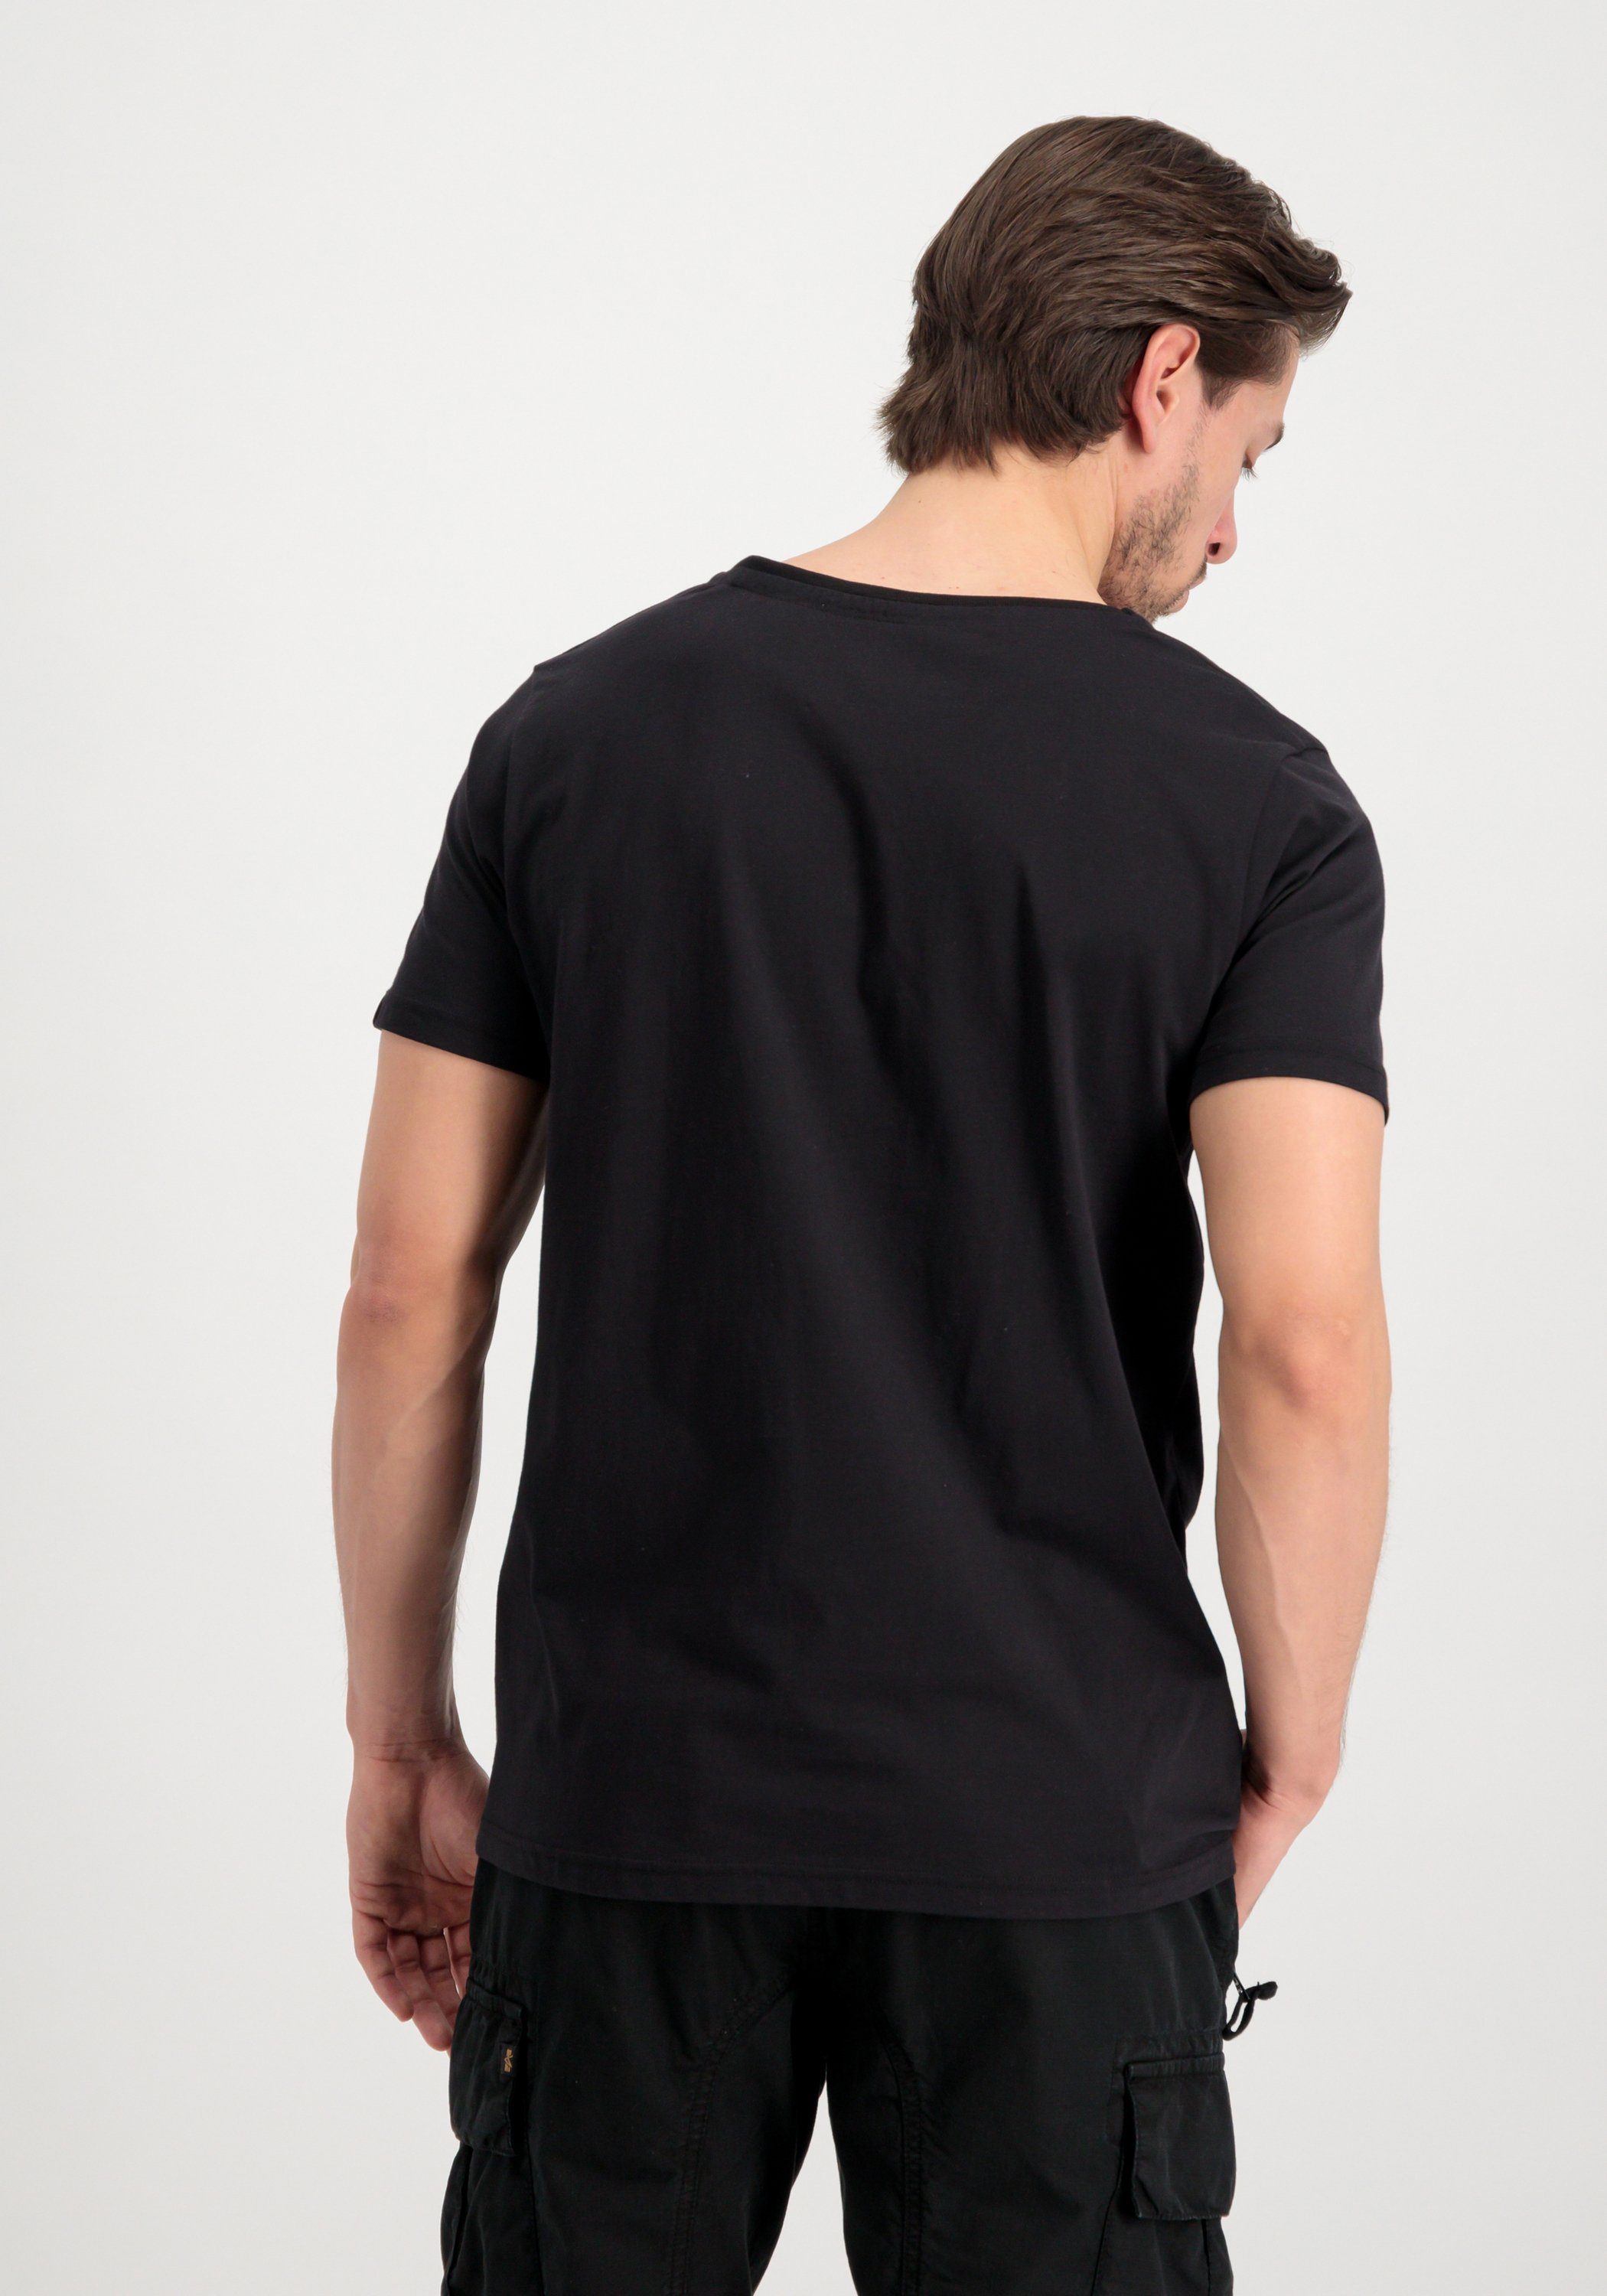 Men Industries Alpha black T-Shirts Logo V-Neck - T Alpha Industries Small T-Shirt Basic